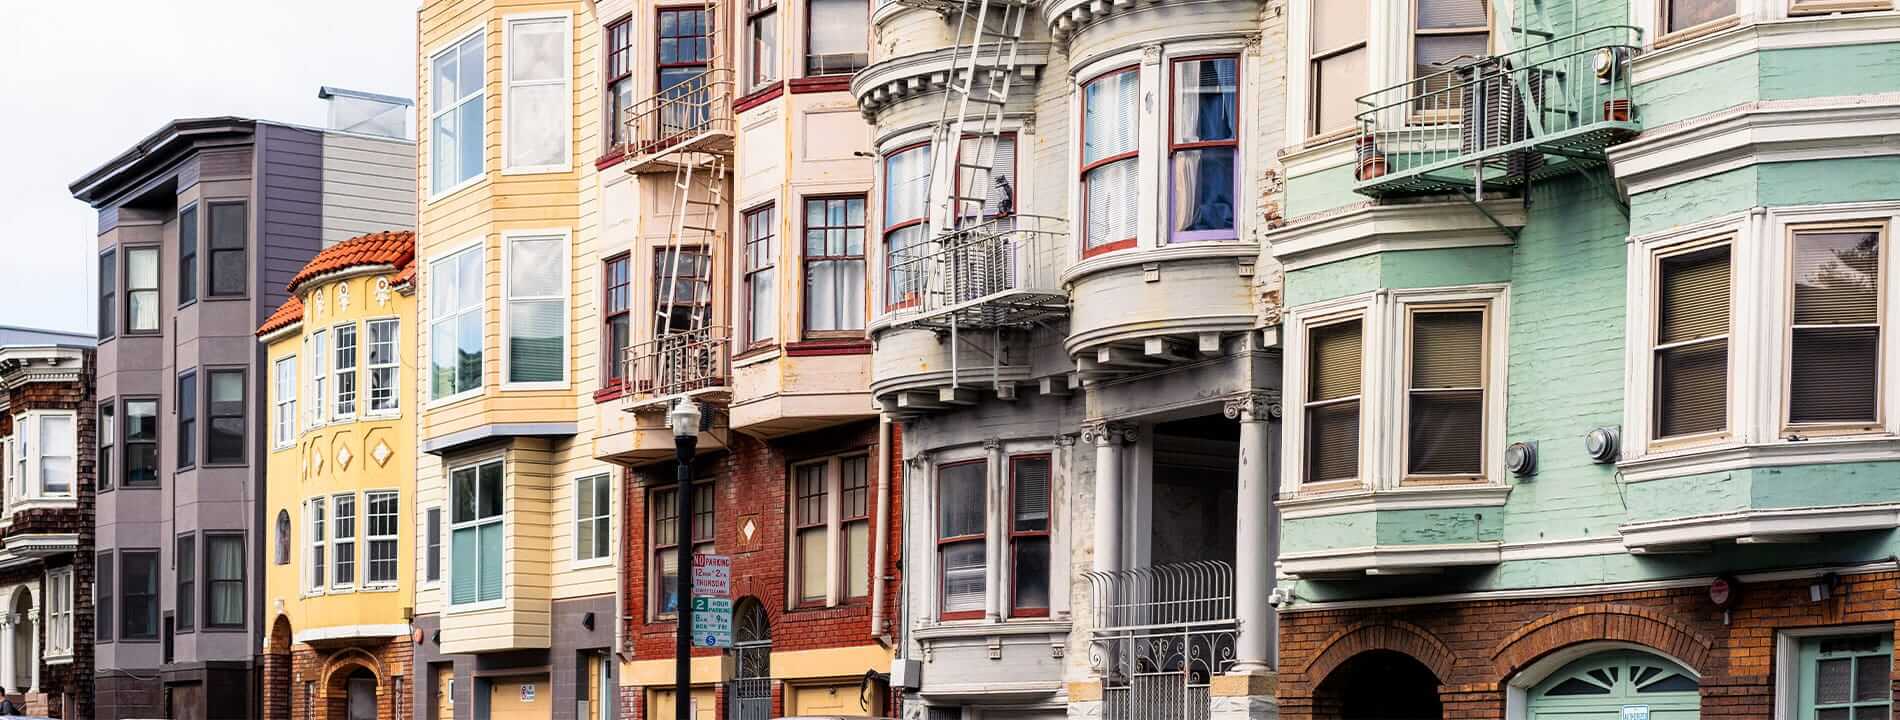 A neighborhood in San Francisco.